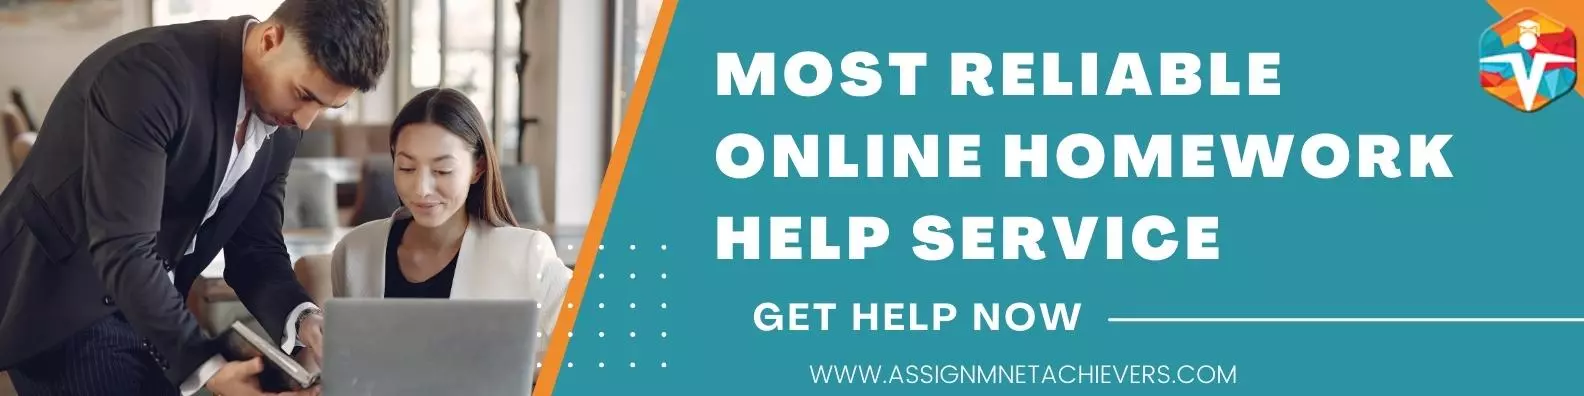 Online Homework Help Service